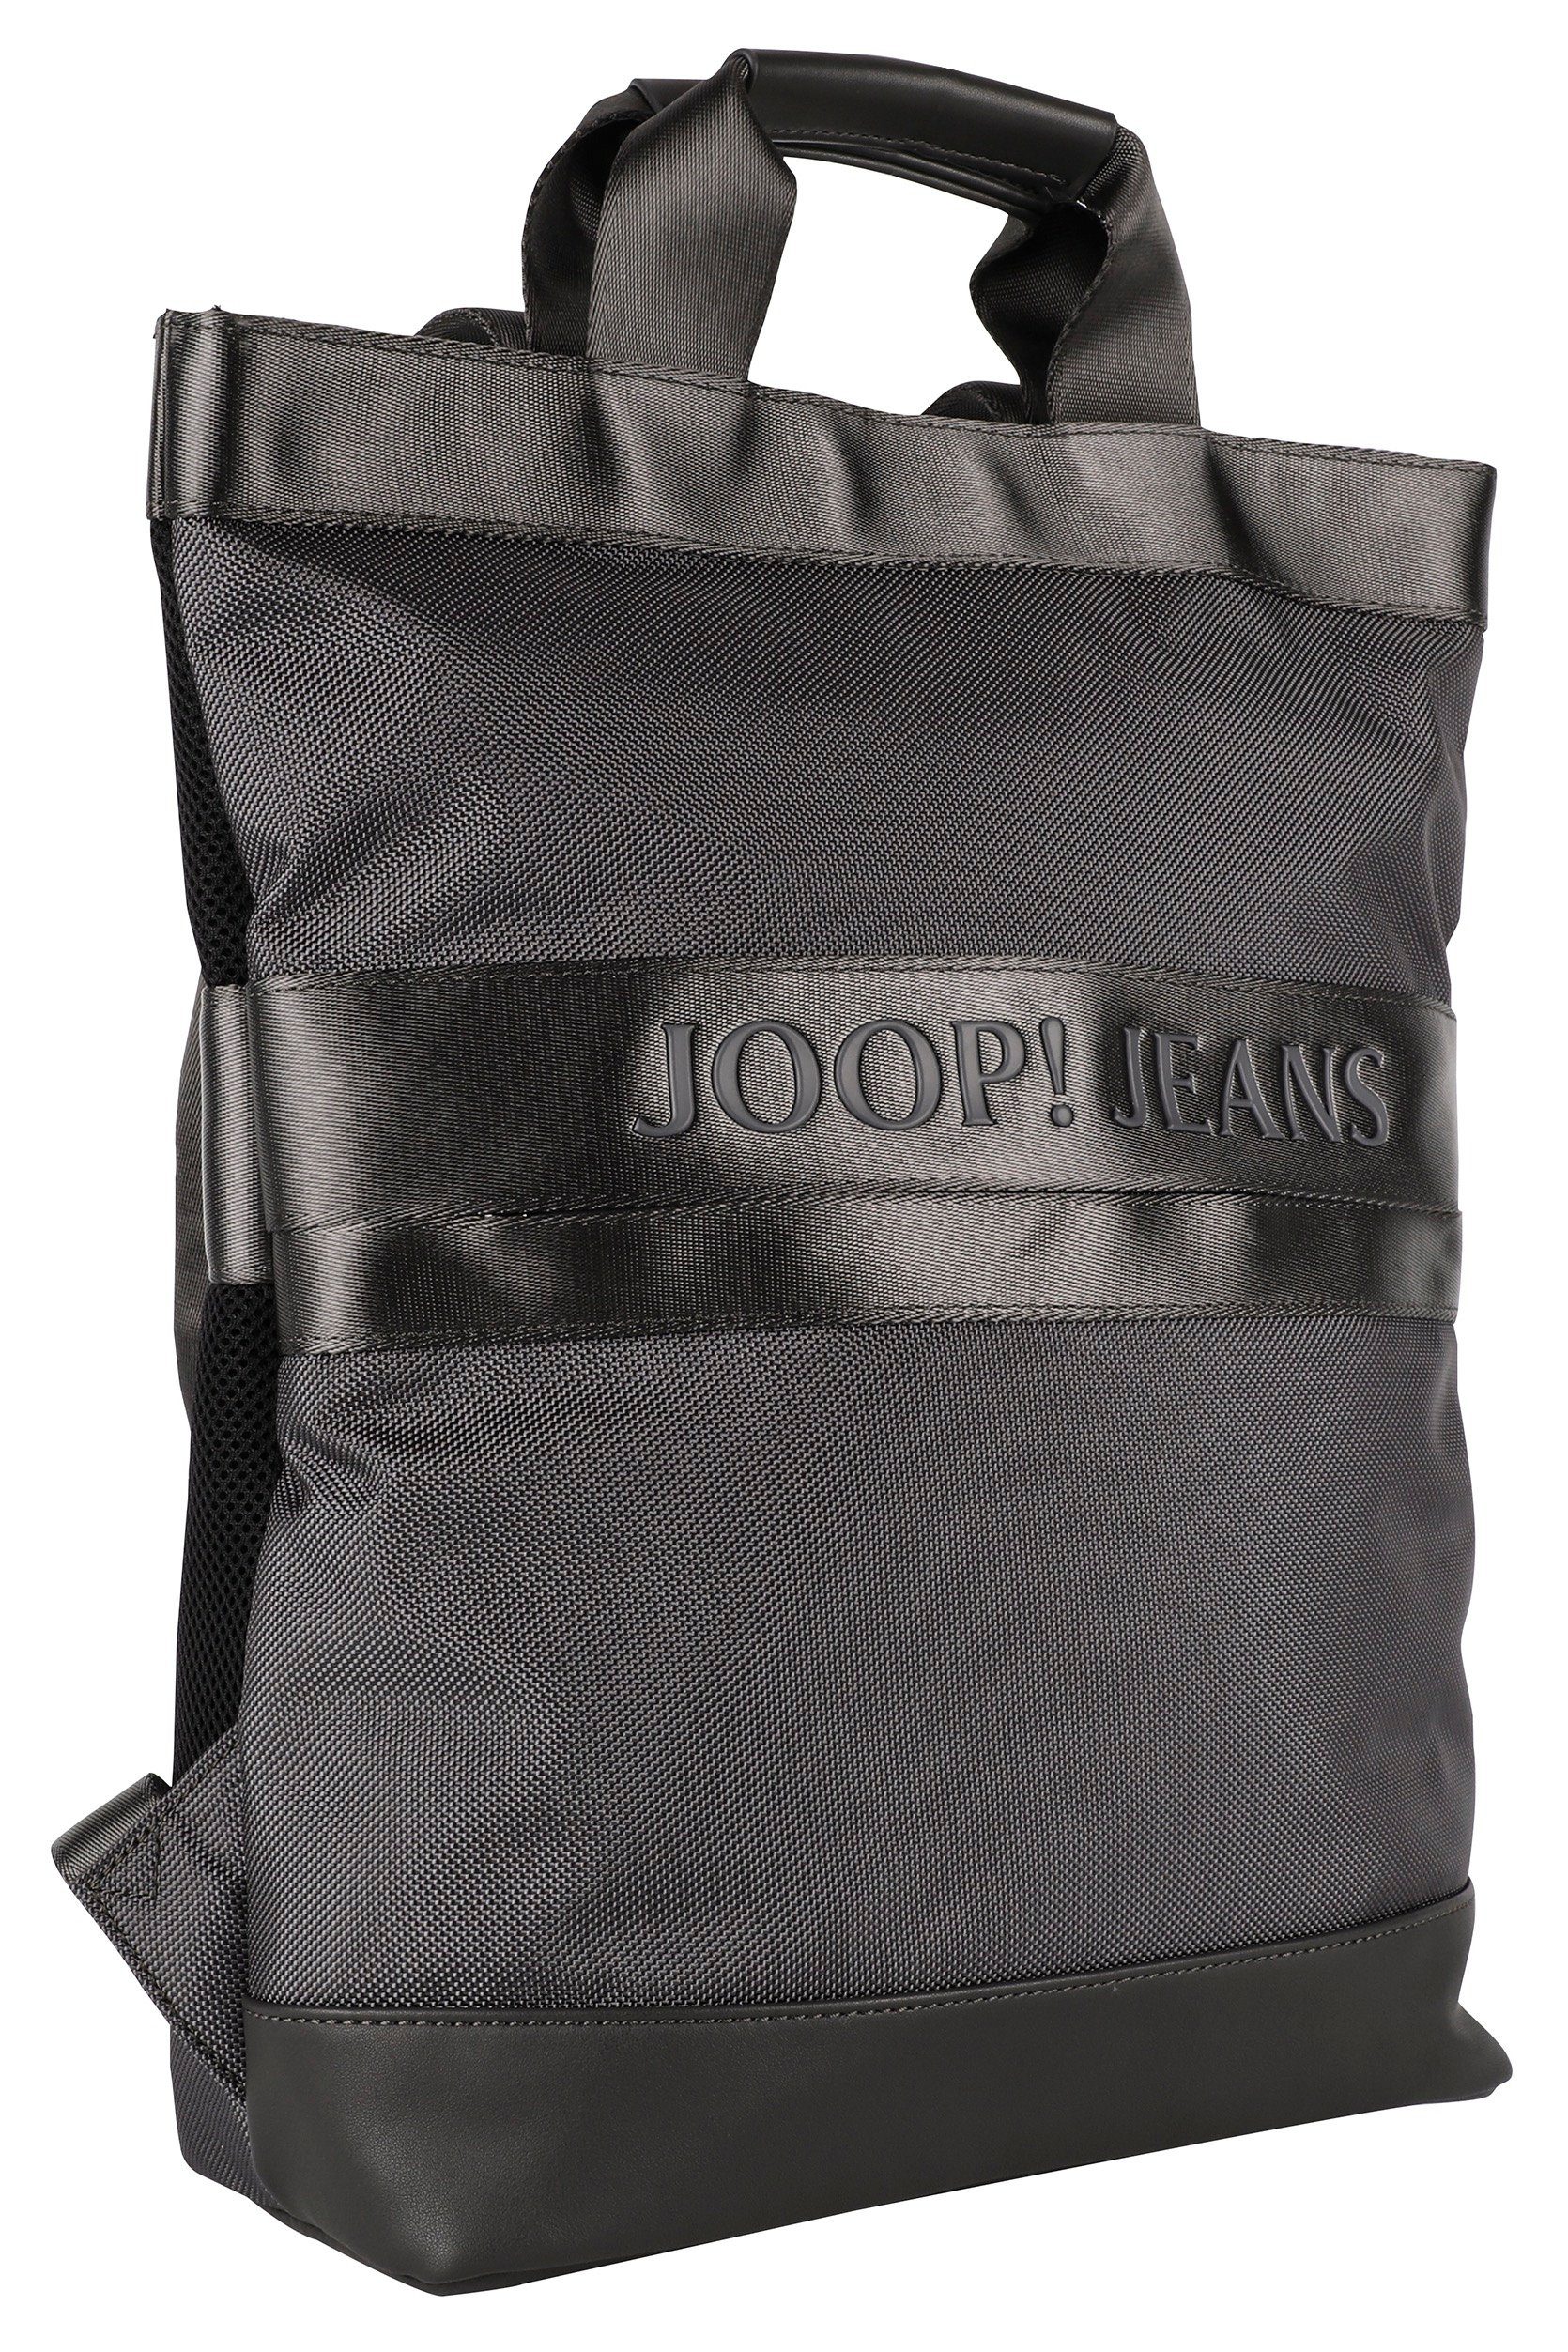 svz, Cityrucksack dunkelgrau backpack mit Jeans Reißverschluss-Vortasche Joop falk modica